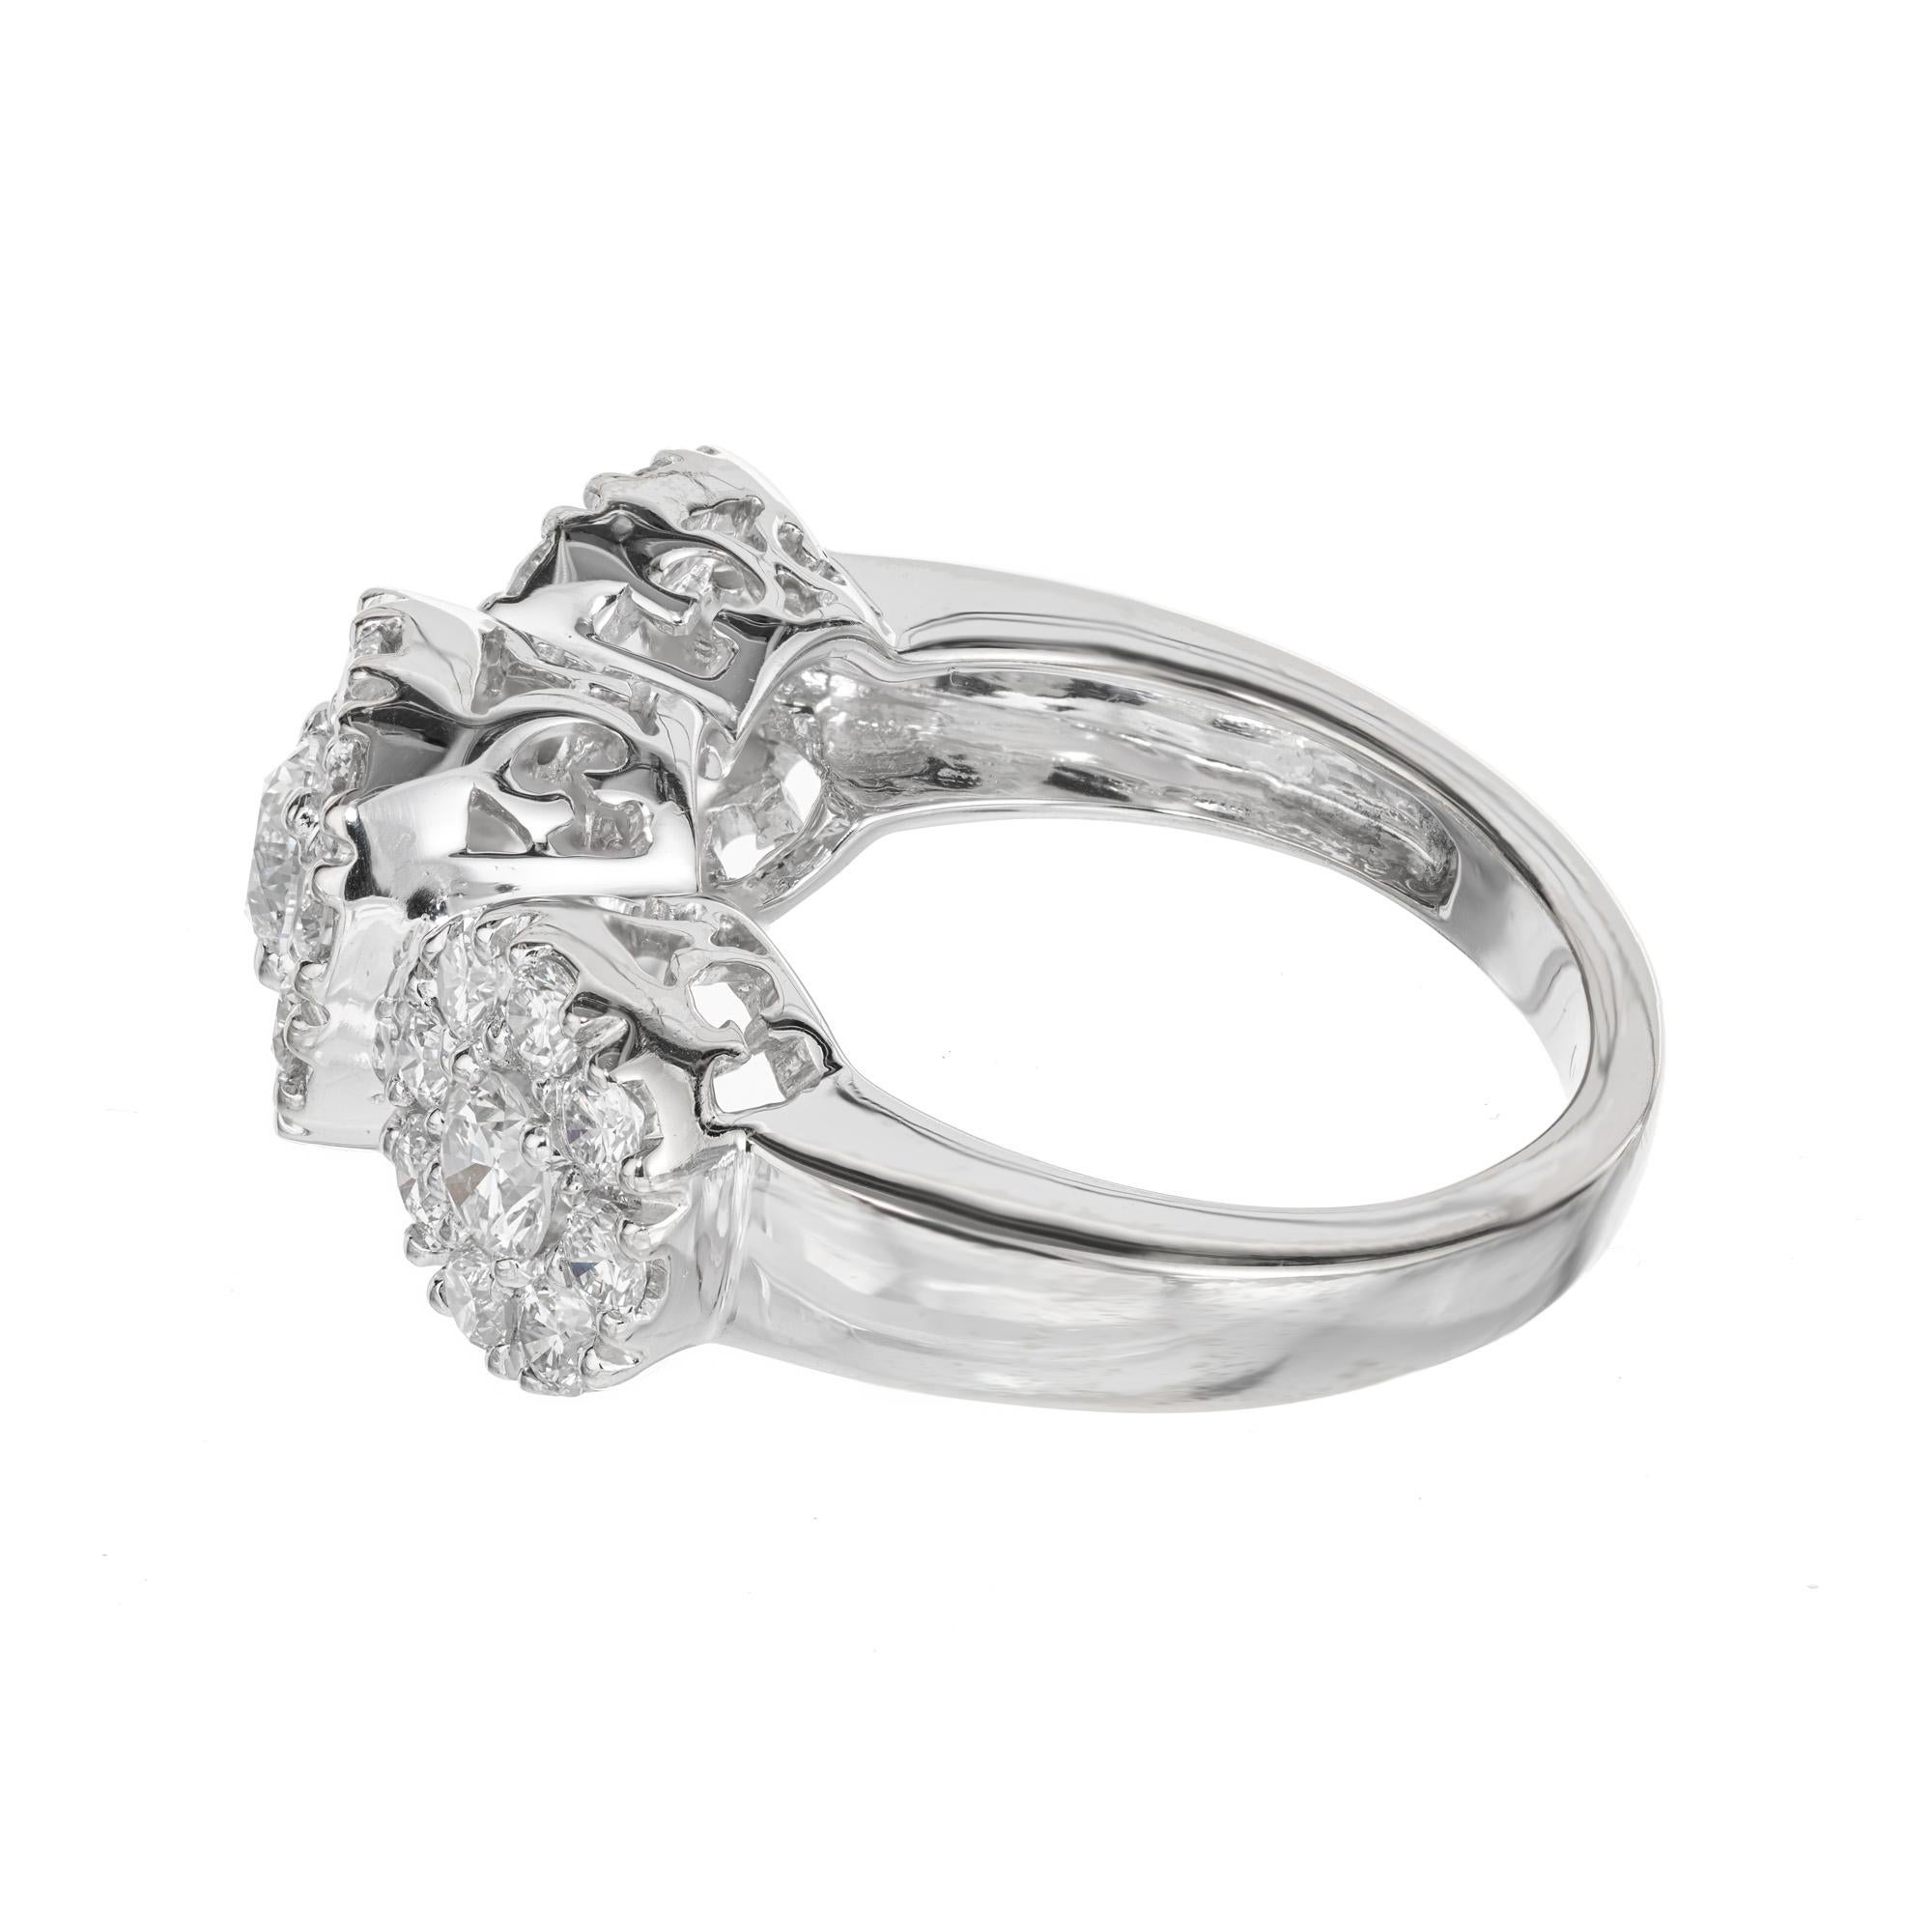 3 carat cluster diamond ring